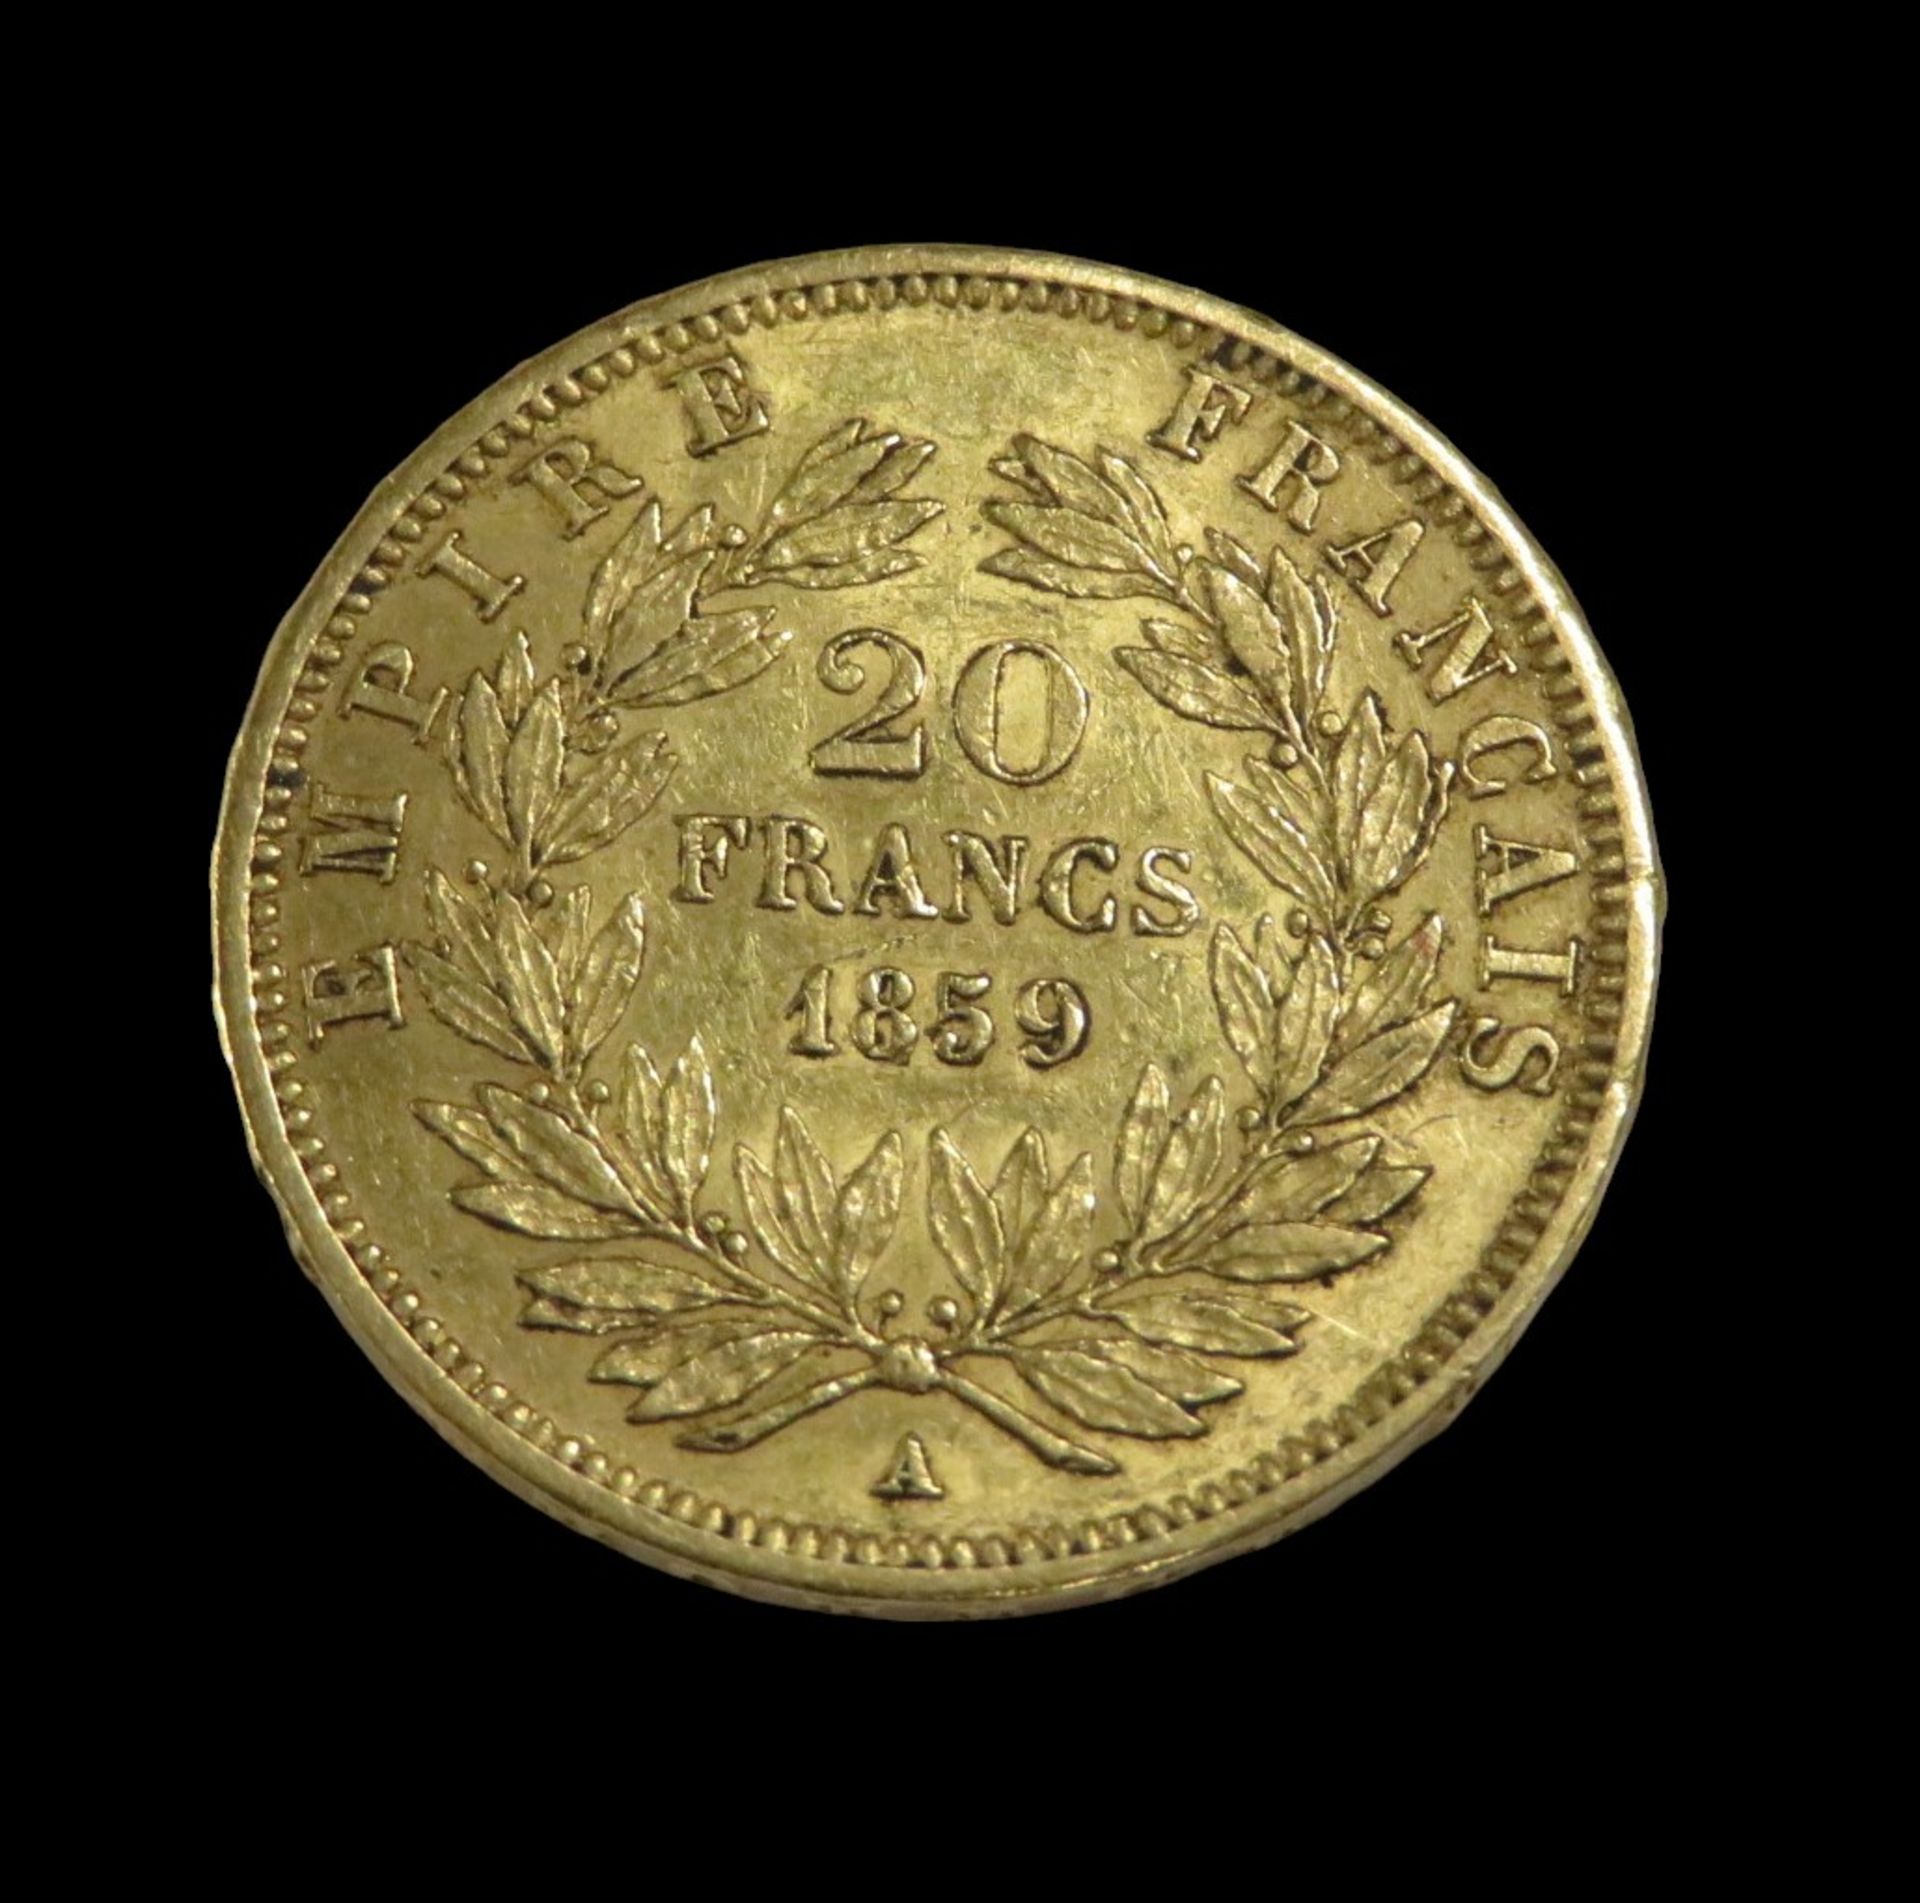 Goldmünze, 20 Francs, Napoleon III, 1859, Gold 900/000, 6,4 g, d 2,1 cm. - Image 2 of 2